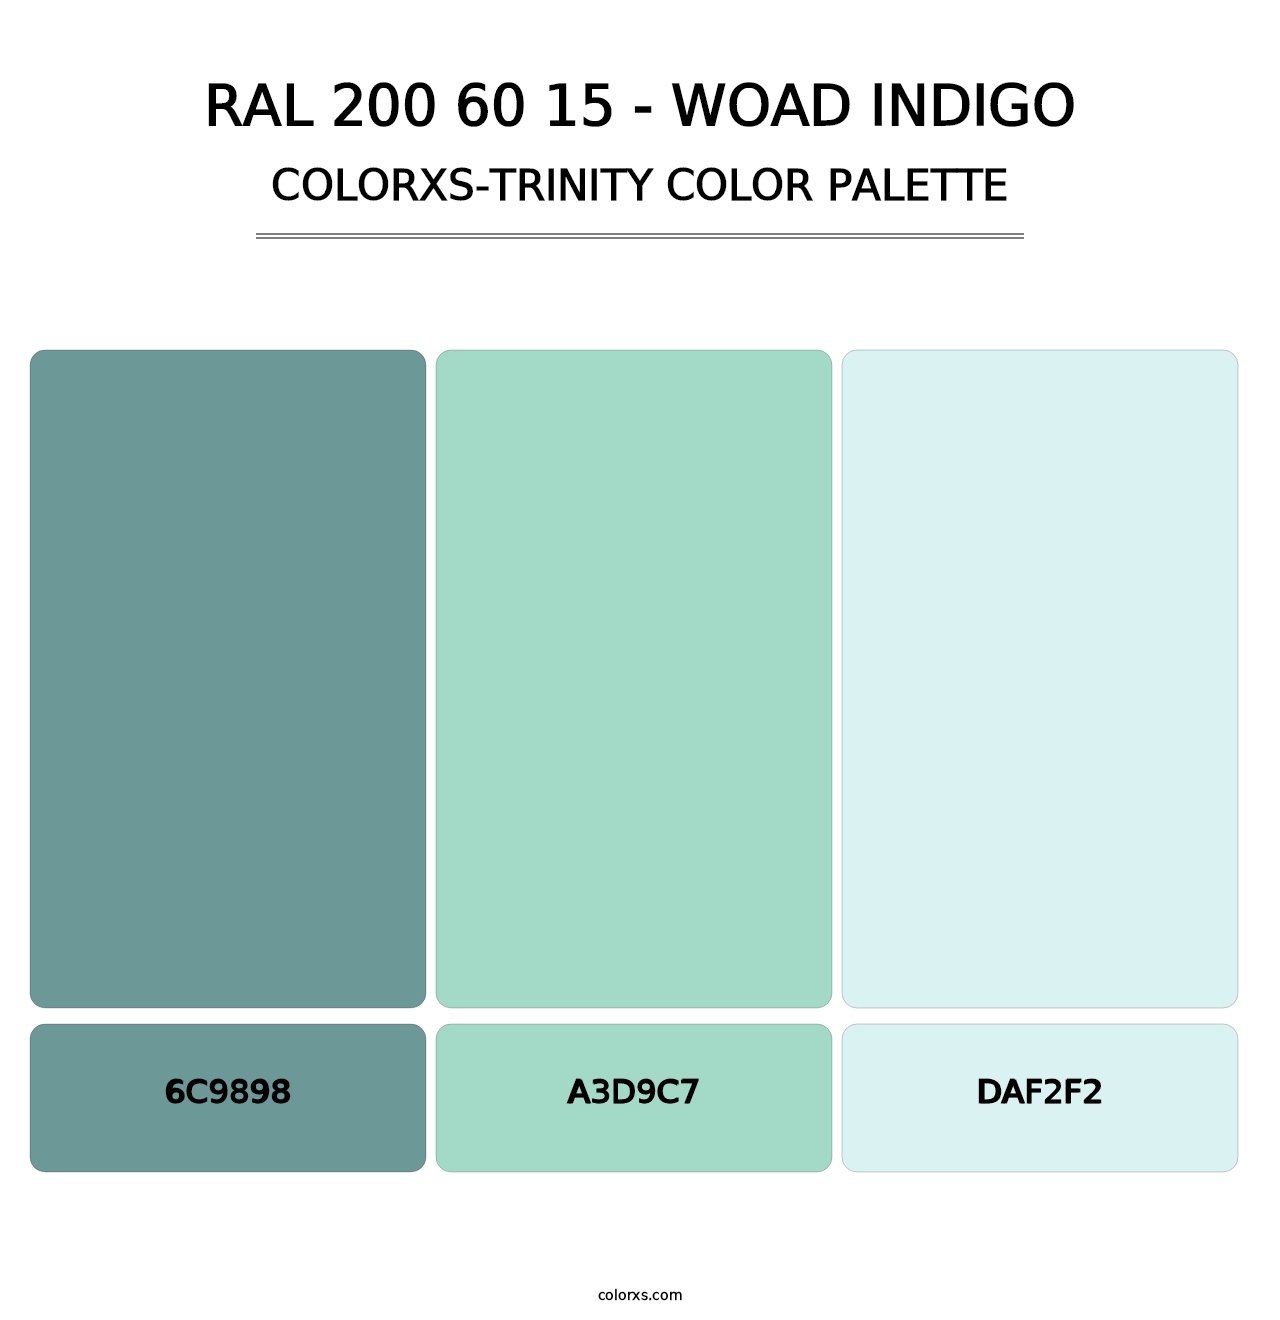 RAL 200 60 15 - Woad Indigo - Colorxs Trinity Palette